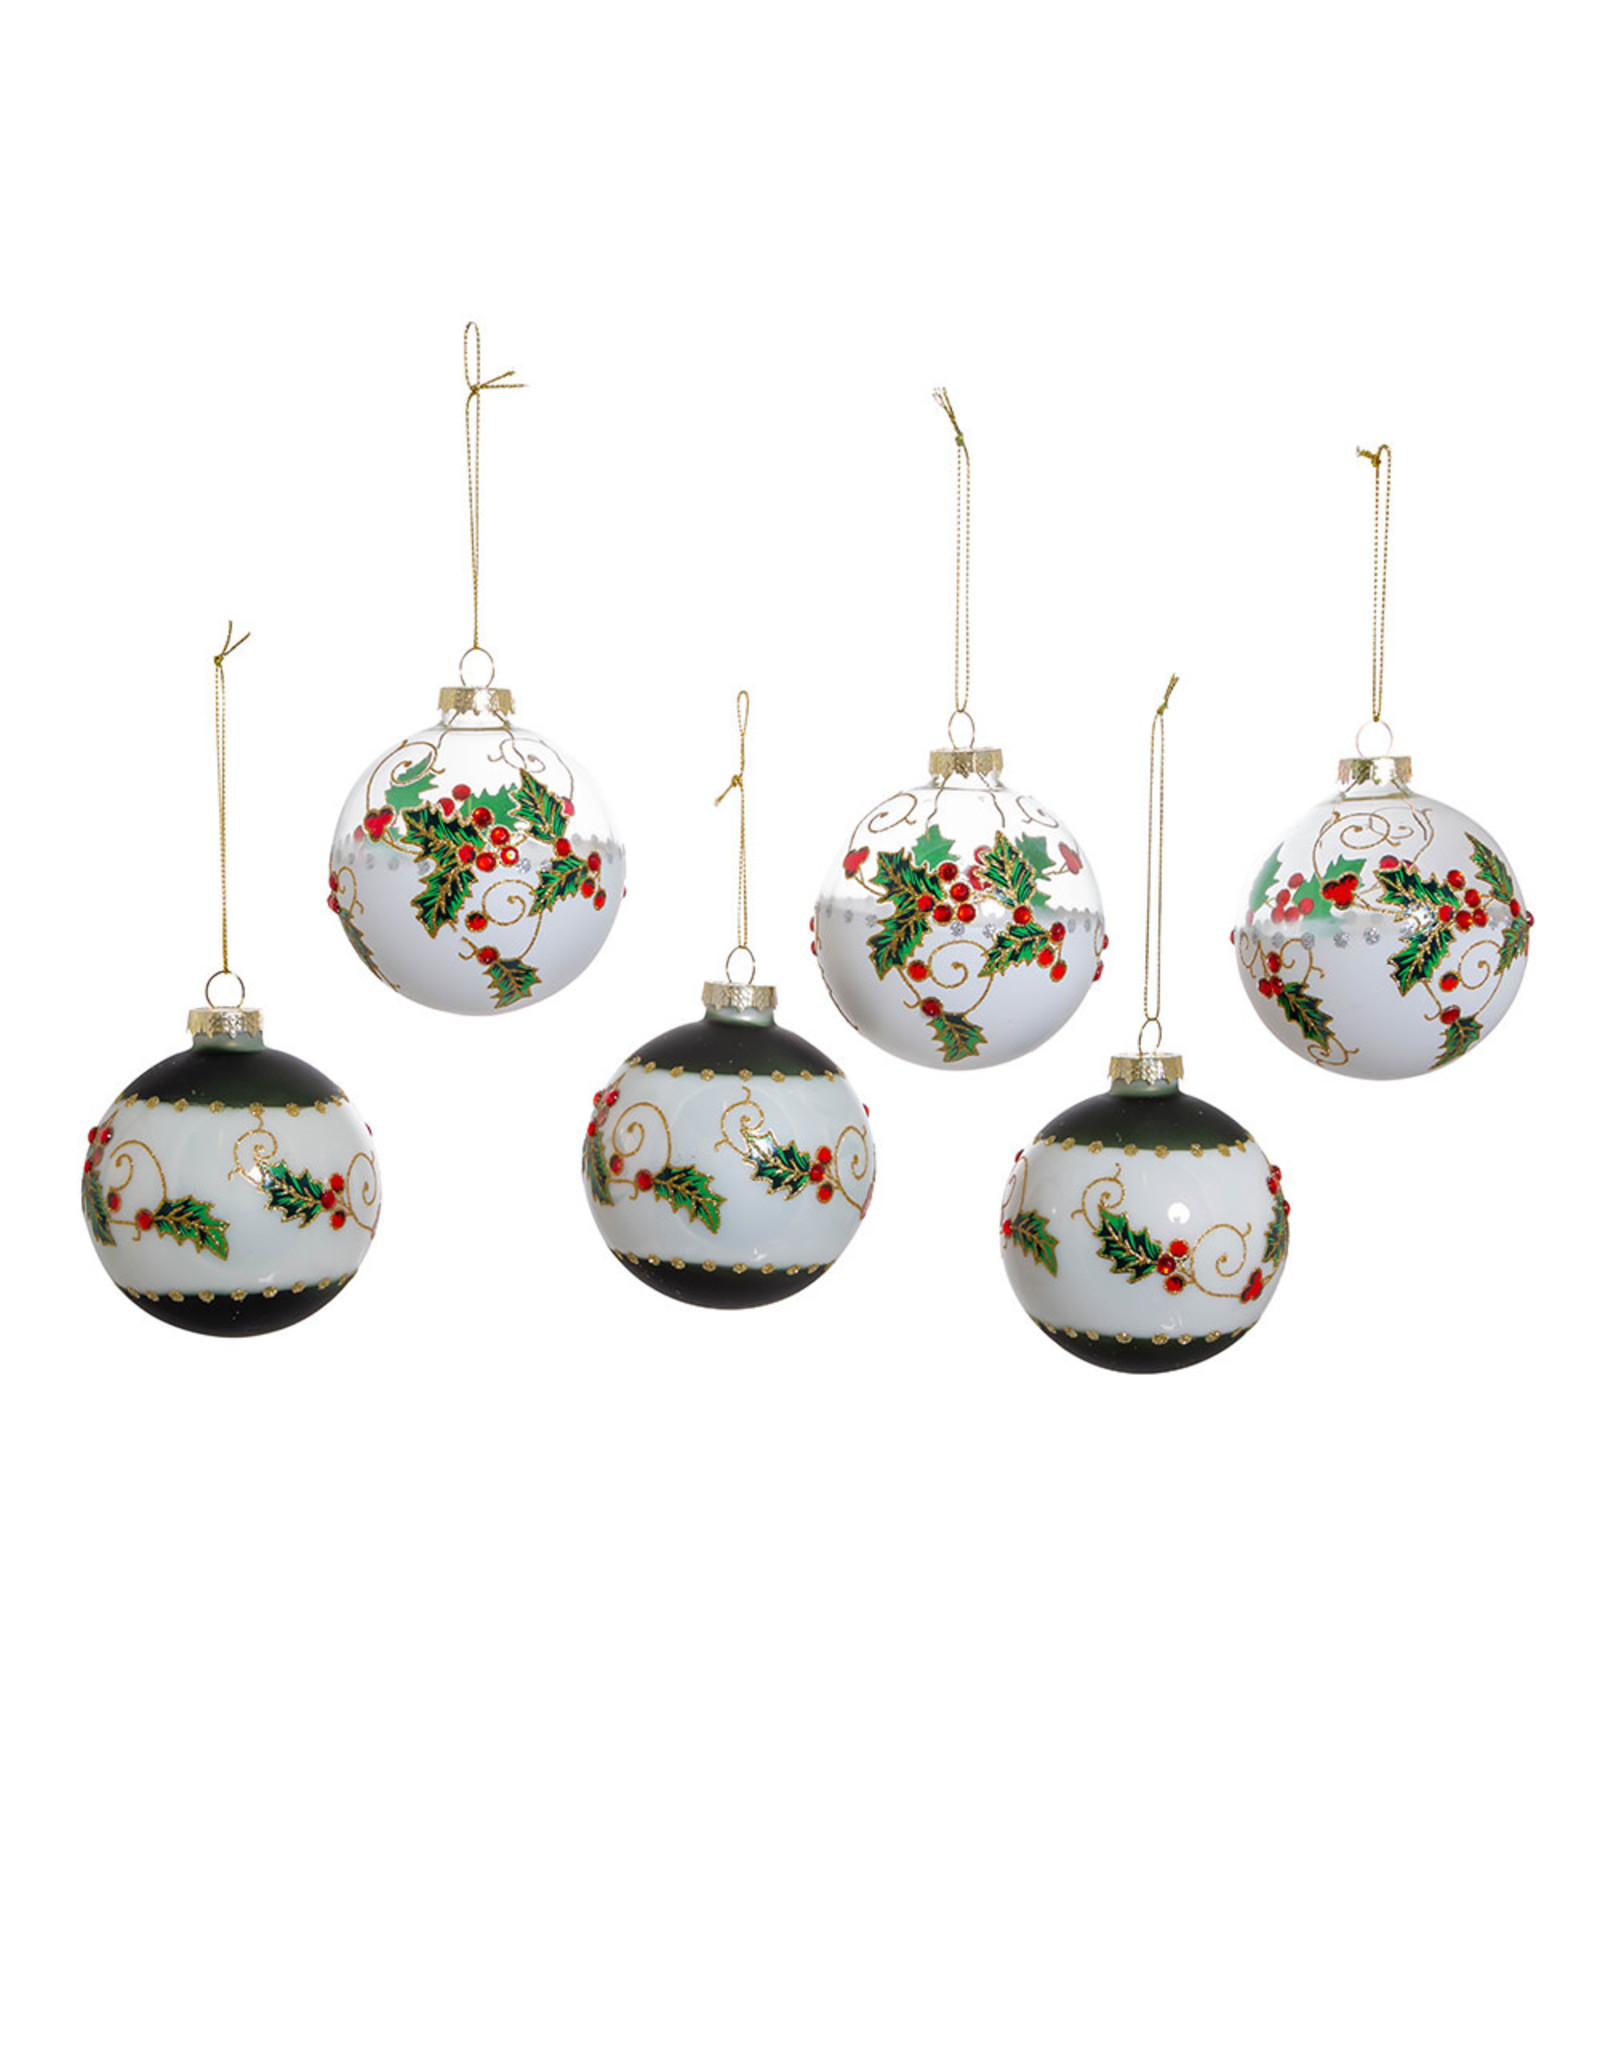 Kurt Adler Holly Leaves and Berries 80mm Glass Ball Ornaments Set 6